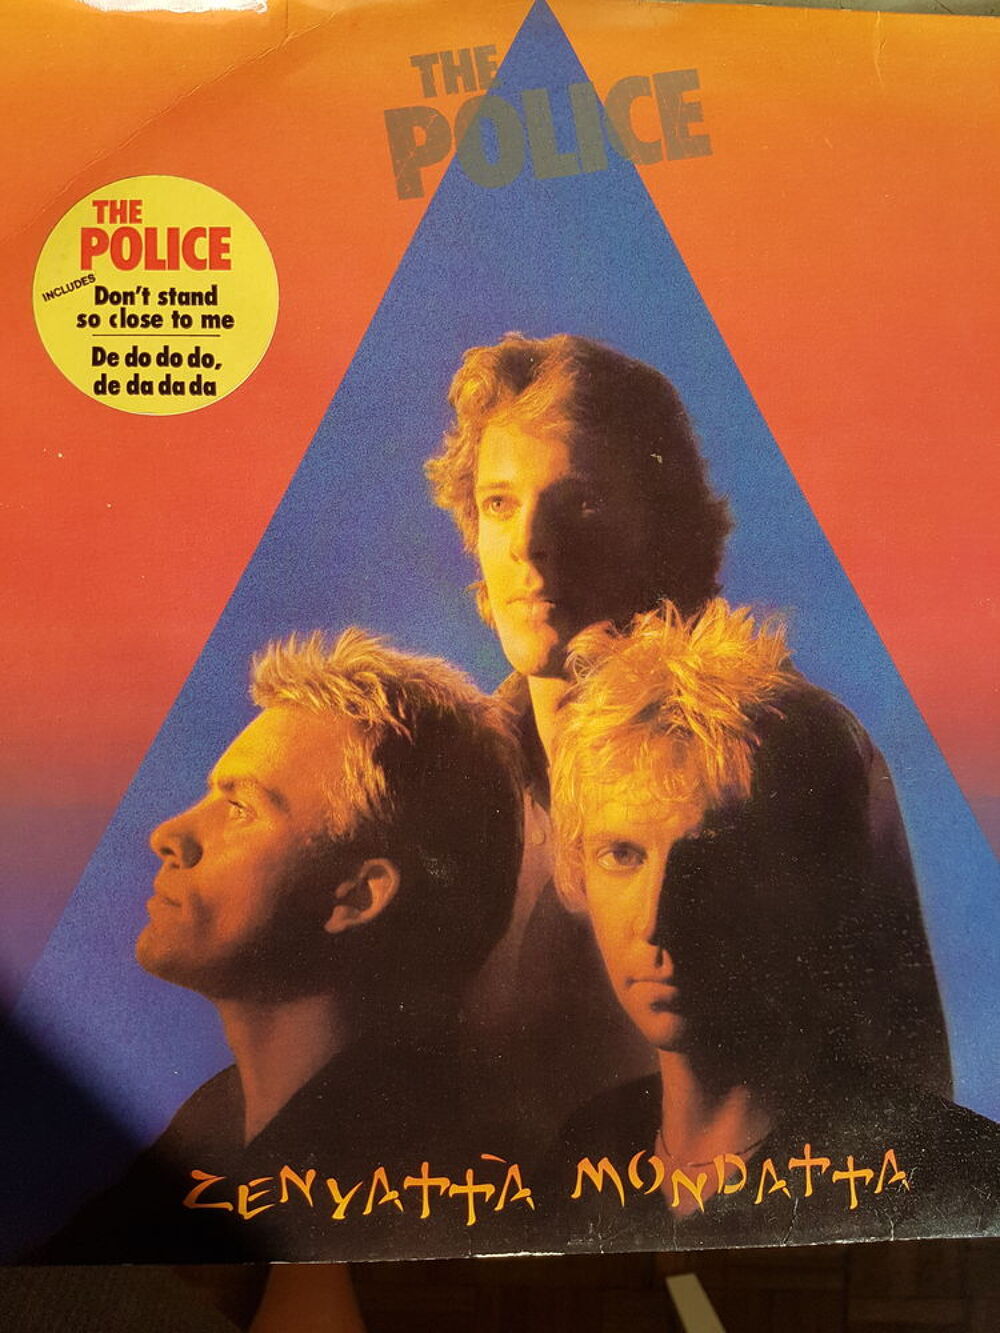 Vinyles Queen Police Audio et hifi